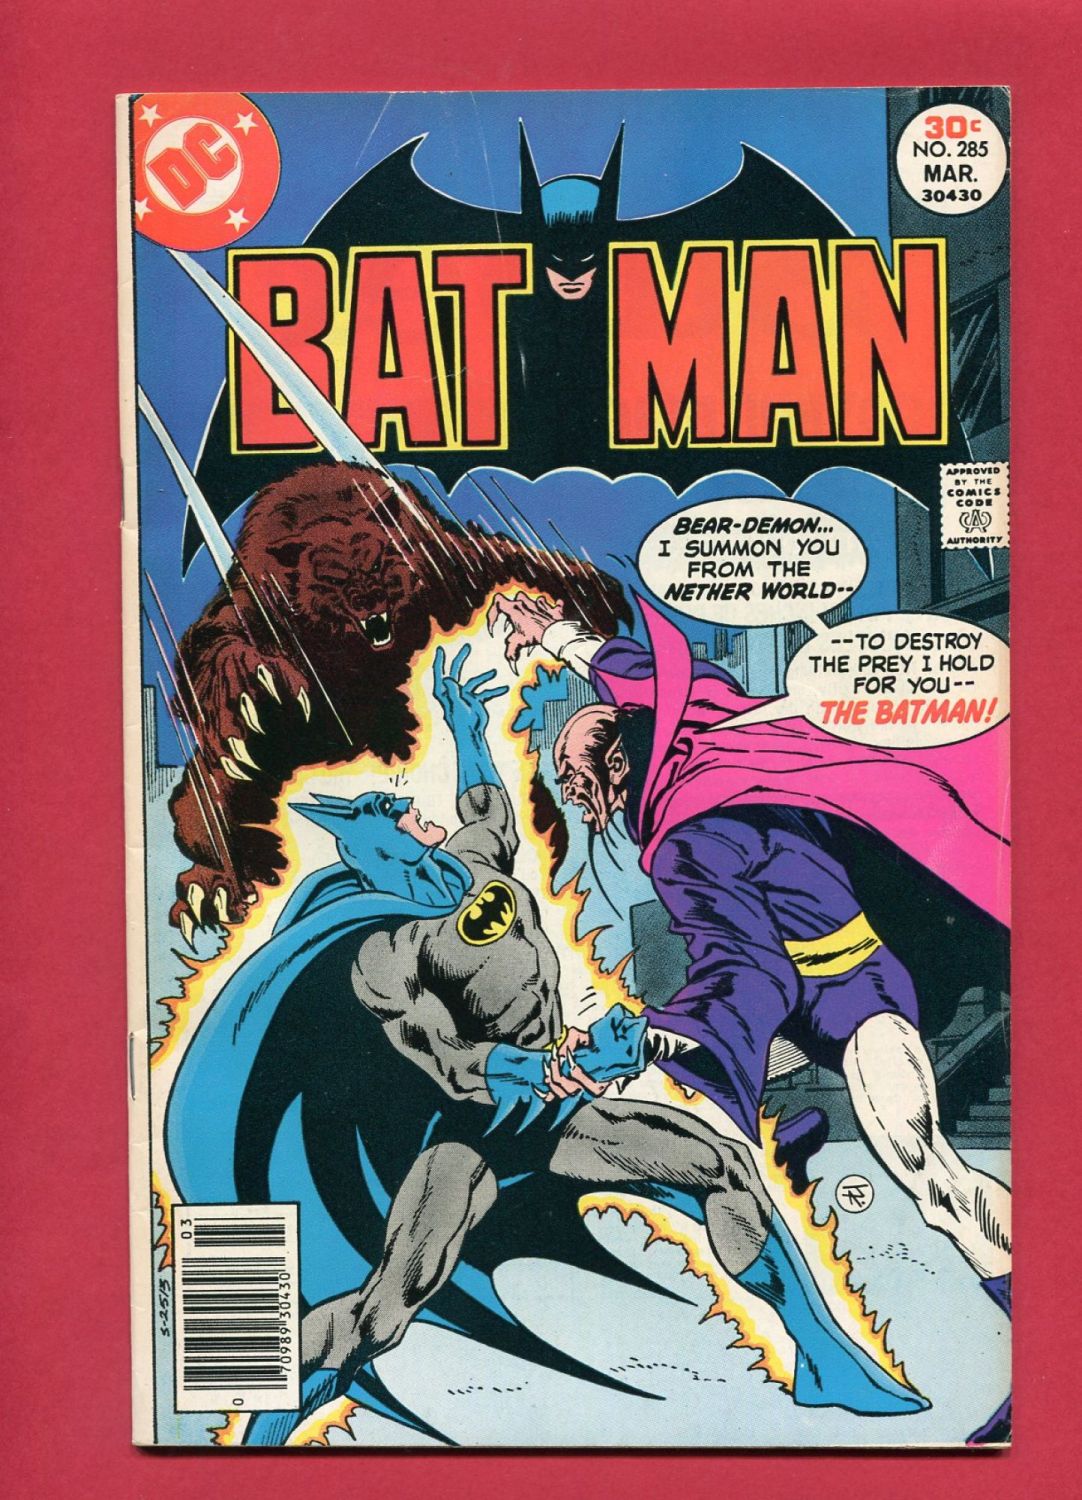 Batman (Volume 1 1940) #285, Mar 1977, Marvel :: Iconic Comics Online